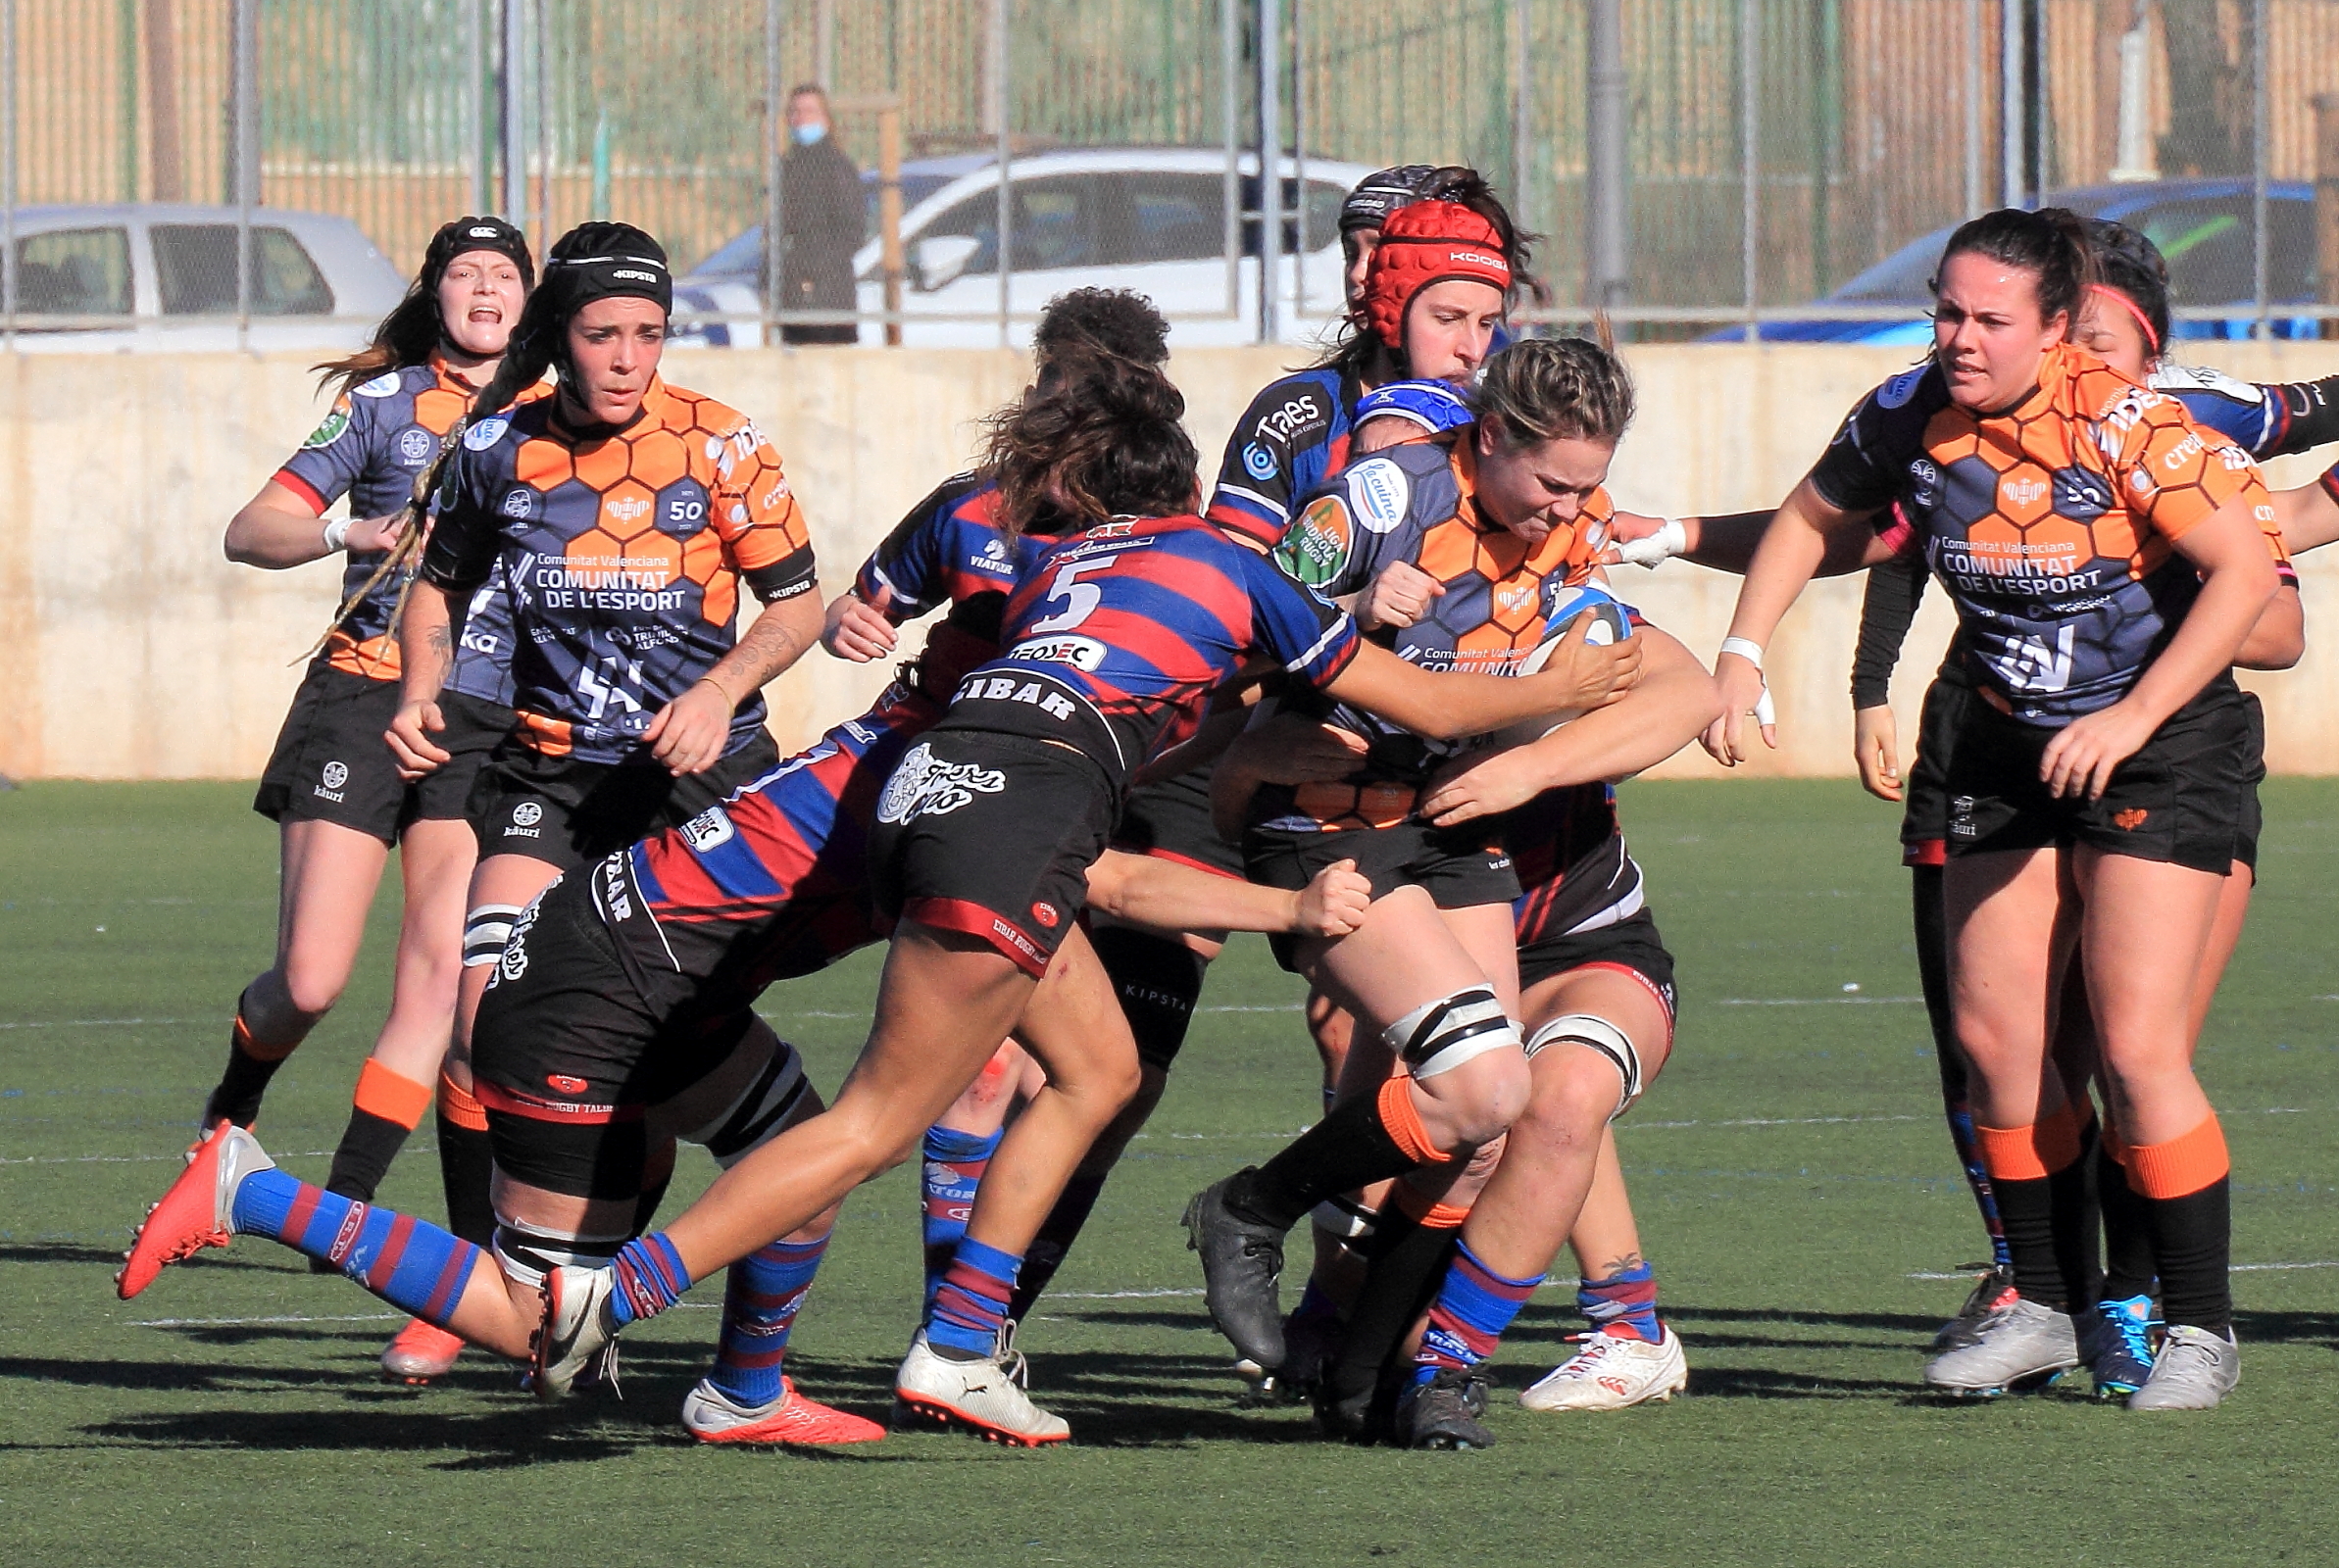 Rugby femenino: conoce todo sobre Les Abelles vs Eibar DH Rugby fem 20-21 J3 (Foto Paco Gozálbez)